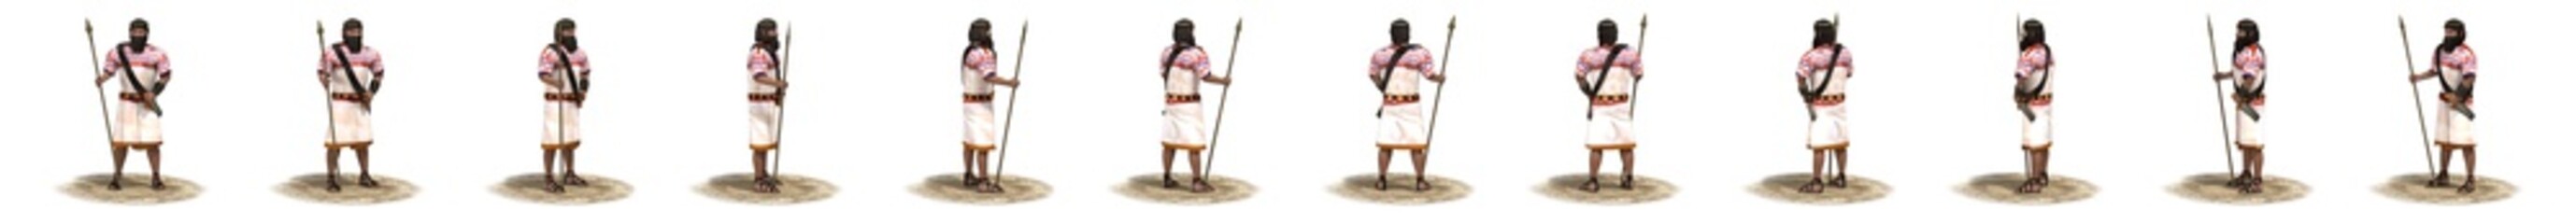 3D rendering, warrior character, illustration